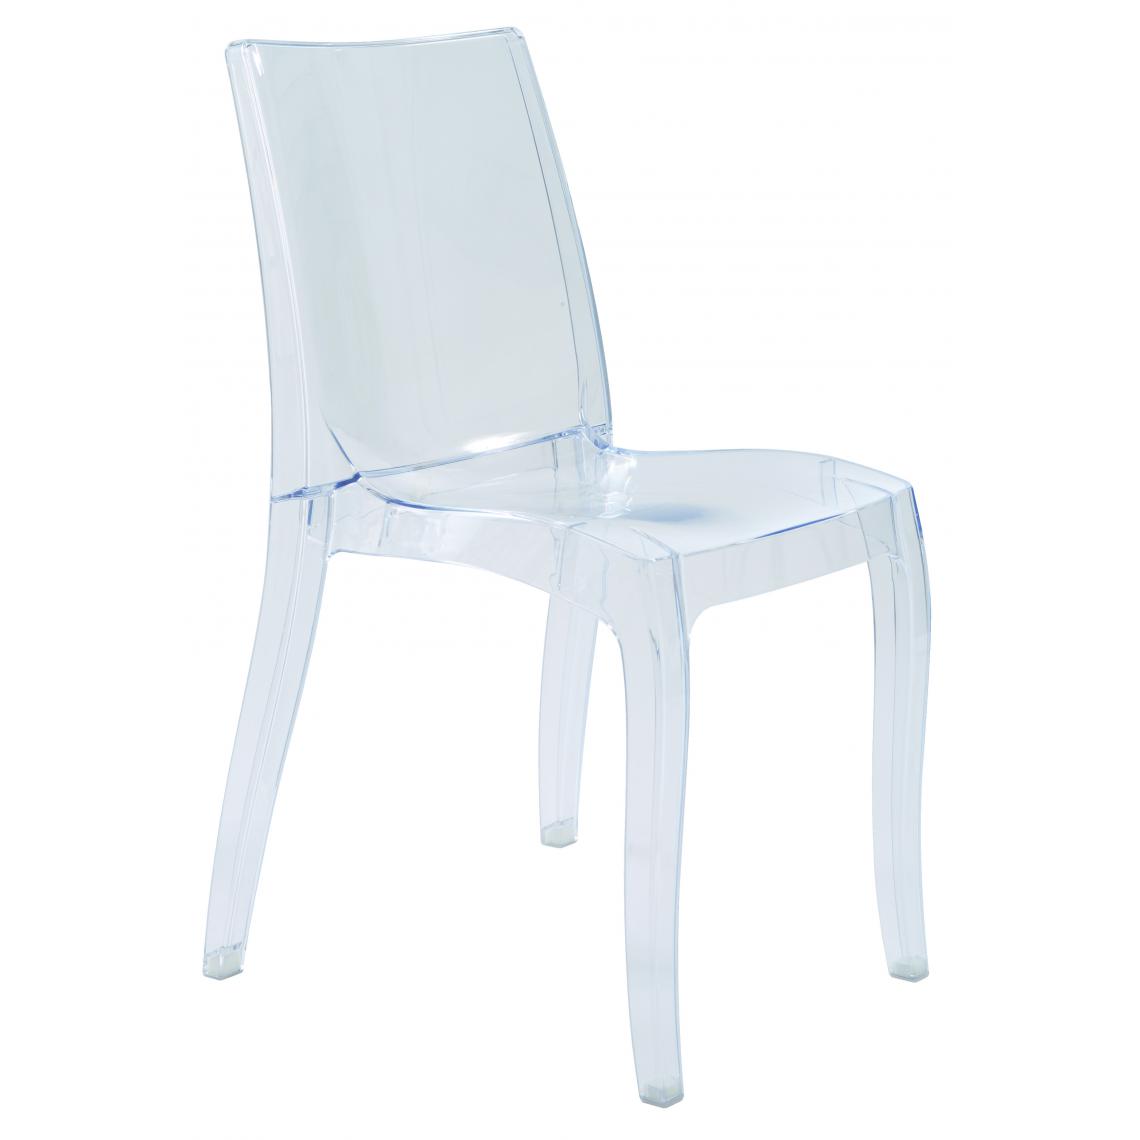 3S. x Home - Chaise Design Transparente ATHENES - Chaises